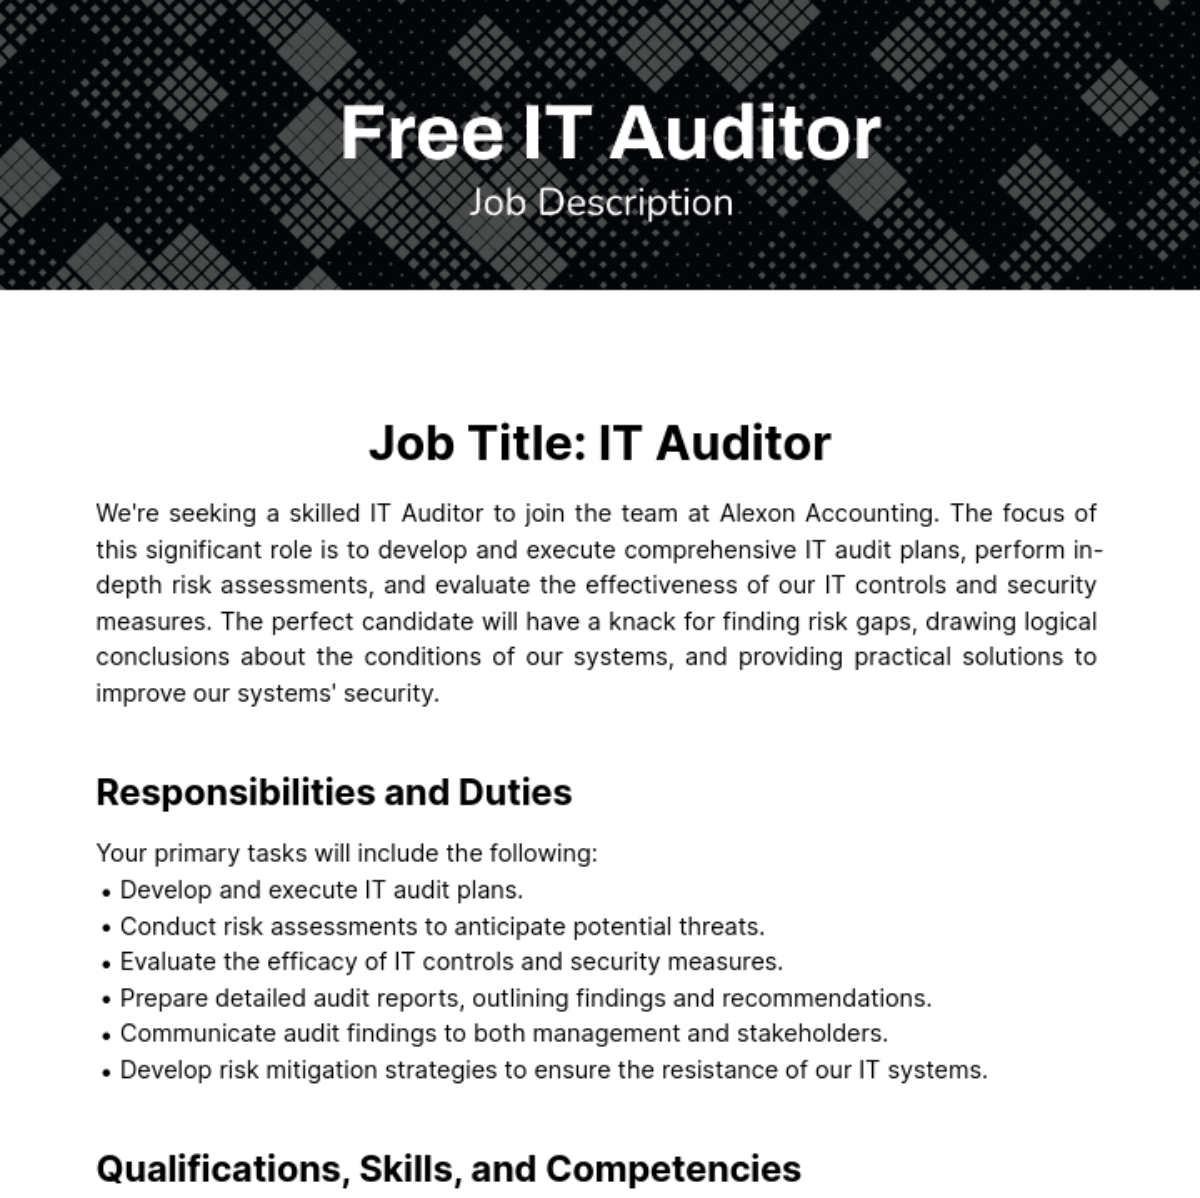 Free IT Auditor Job Description Template